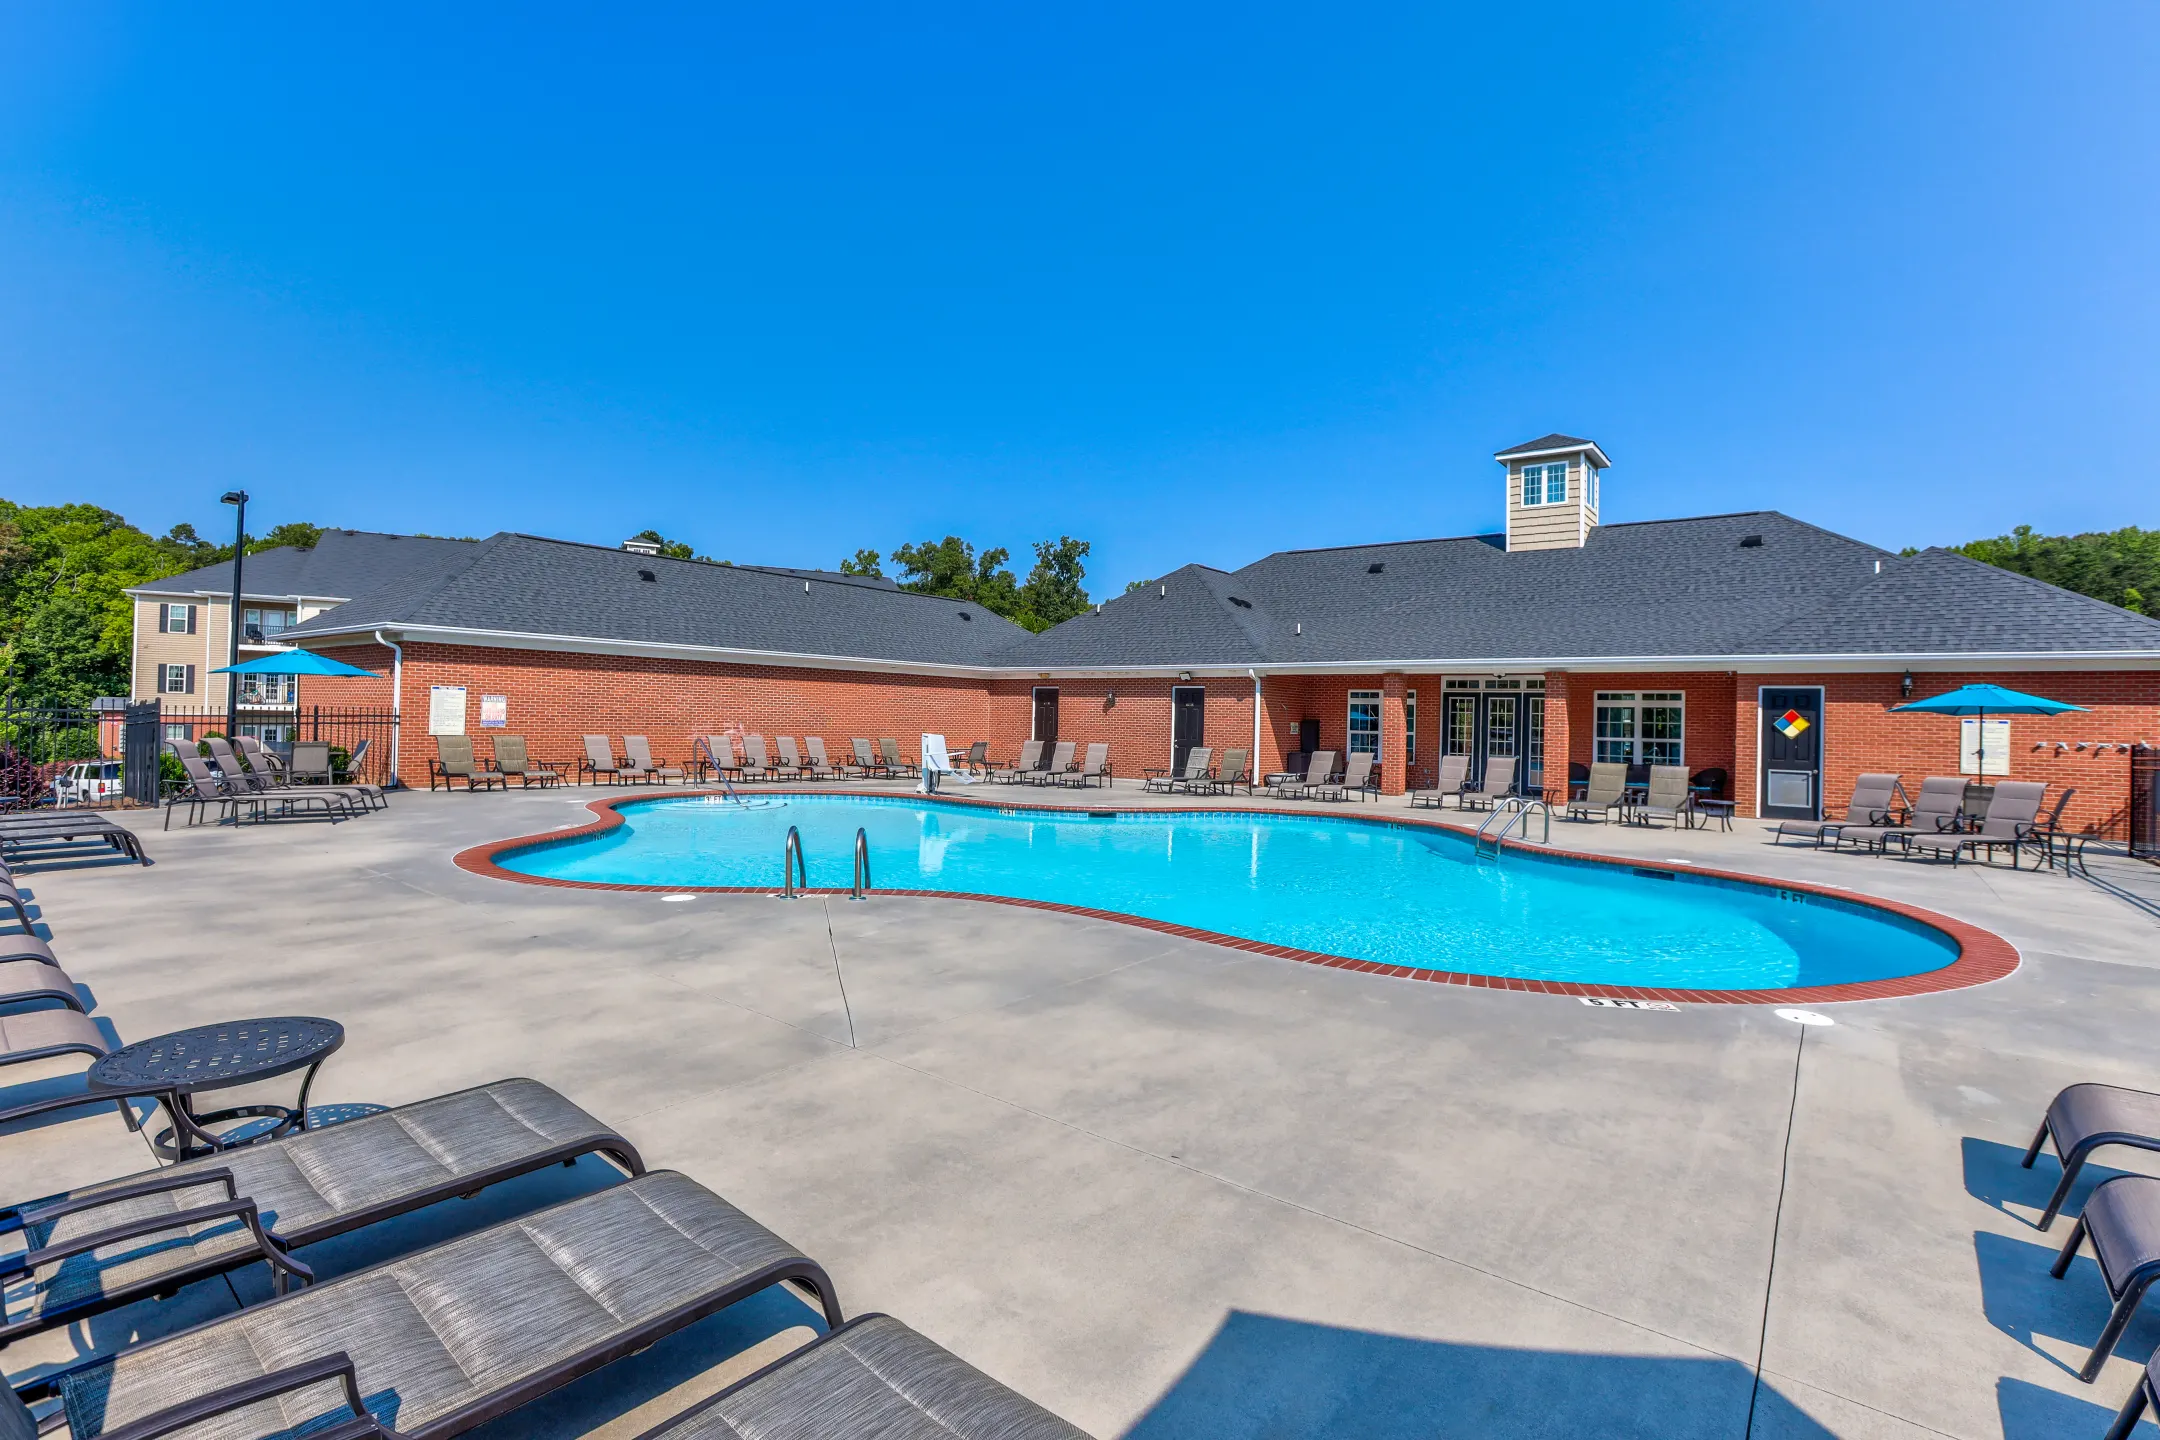 Pool - Stafford Place - Winston-Salem, NC